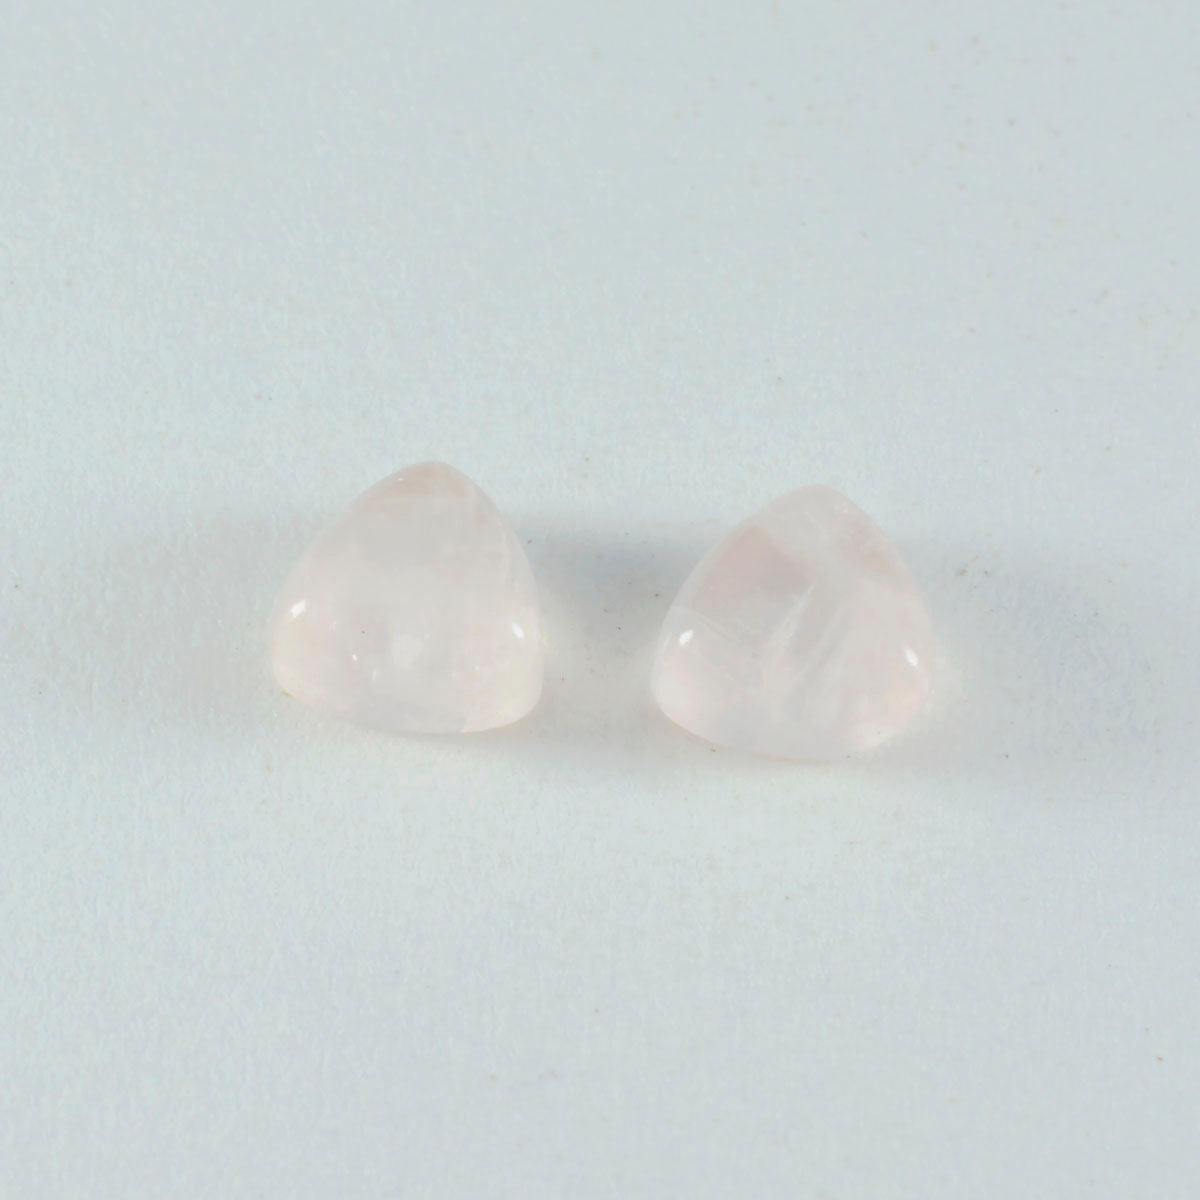 Riyogems 1PC Pink Rose Quartz Cabochon 12x12 mm Trillion Shape Good Quality Gemstone